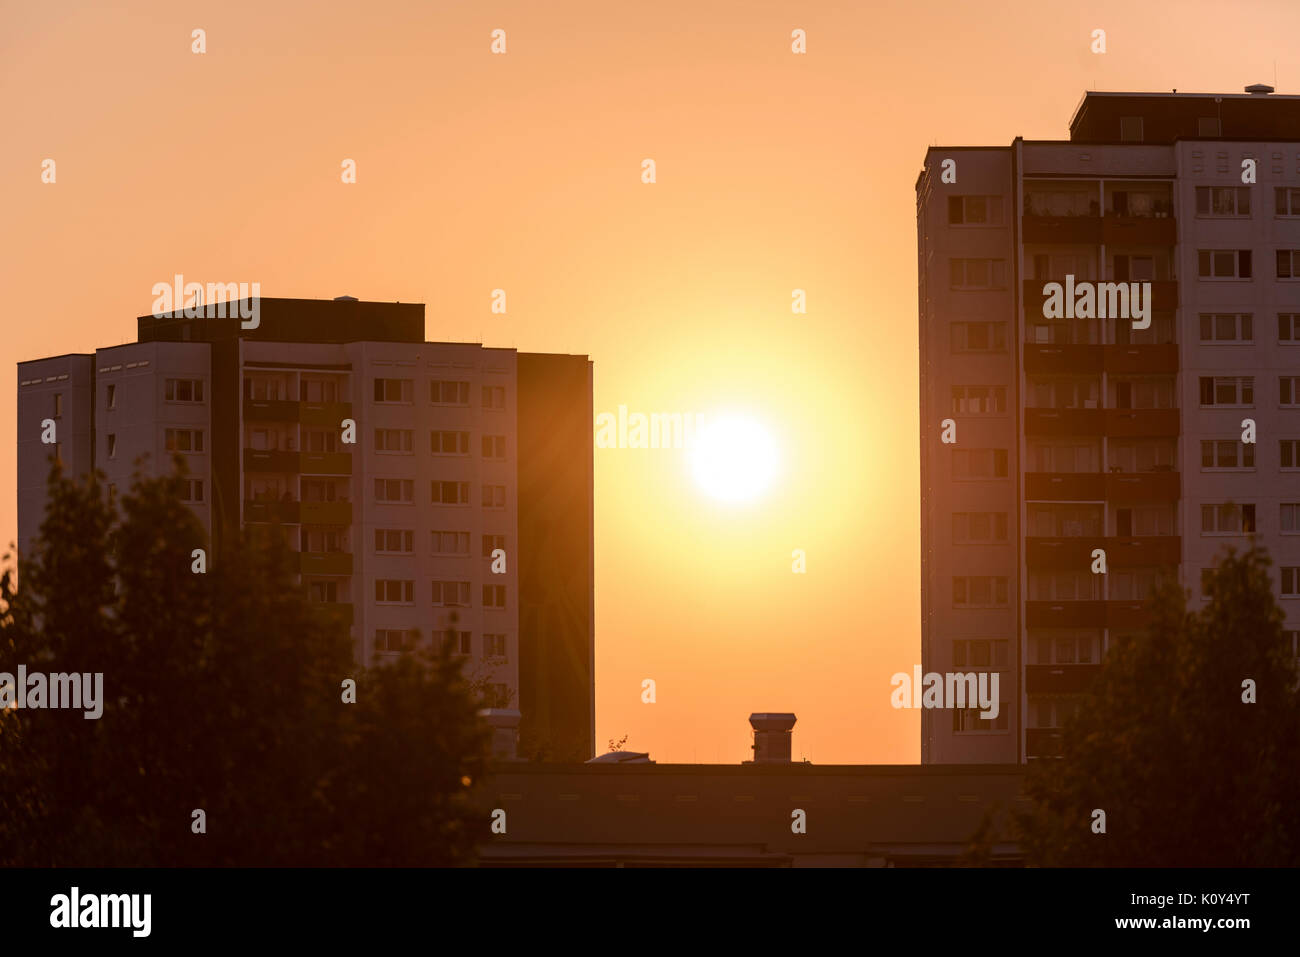 Residential block in Erfurt at sunrise Stock Photo